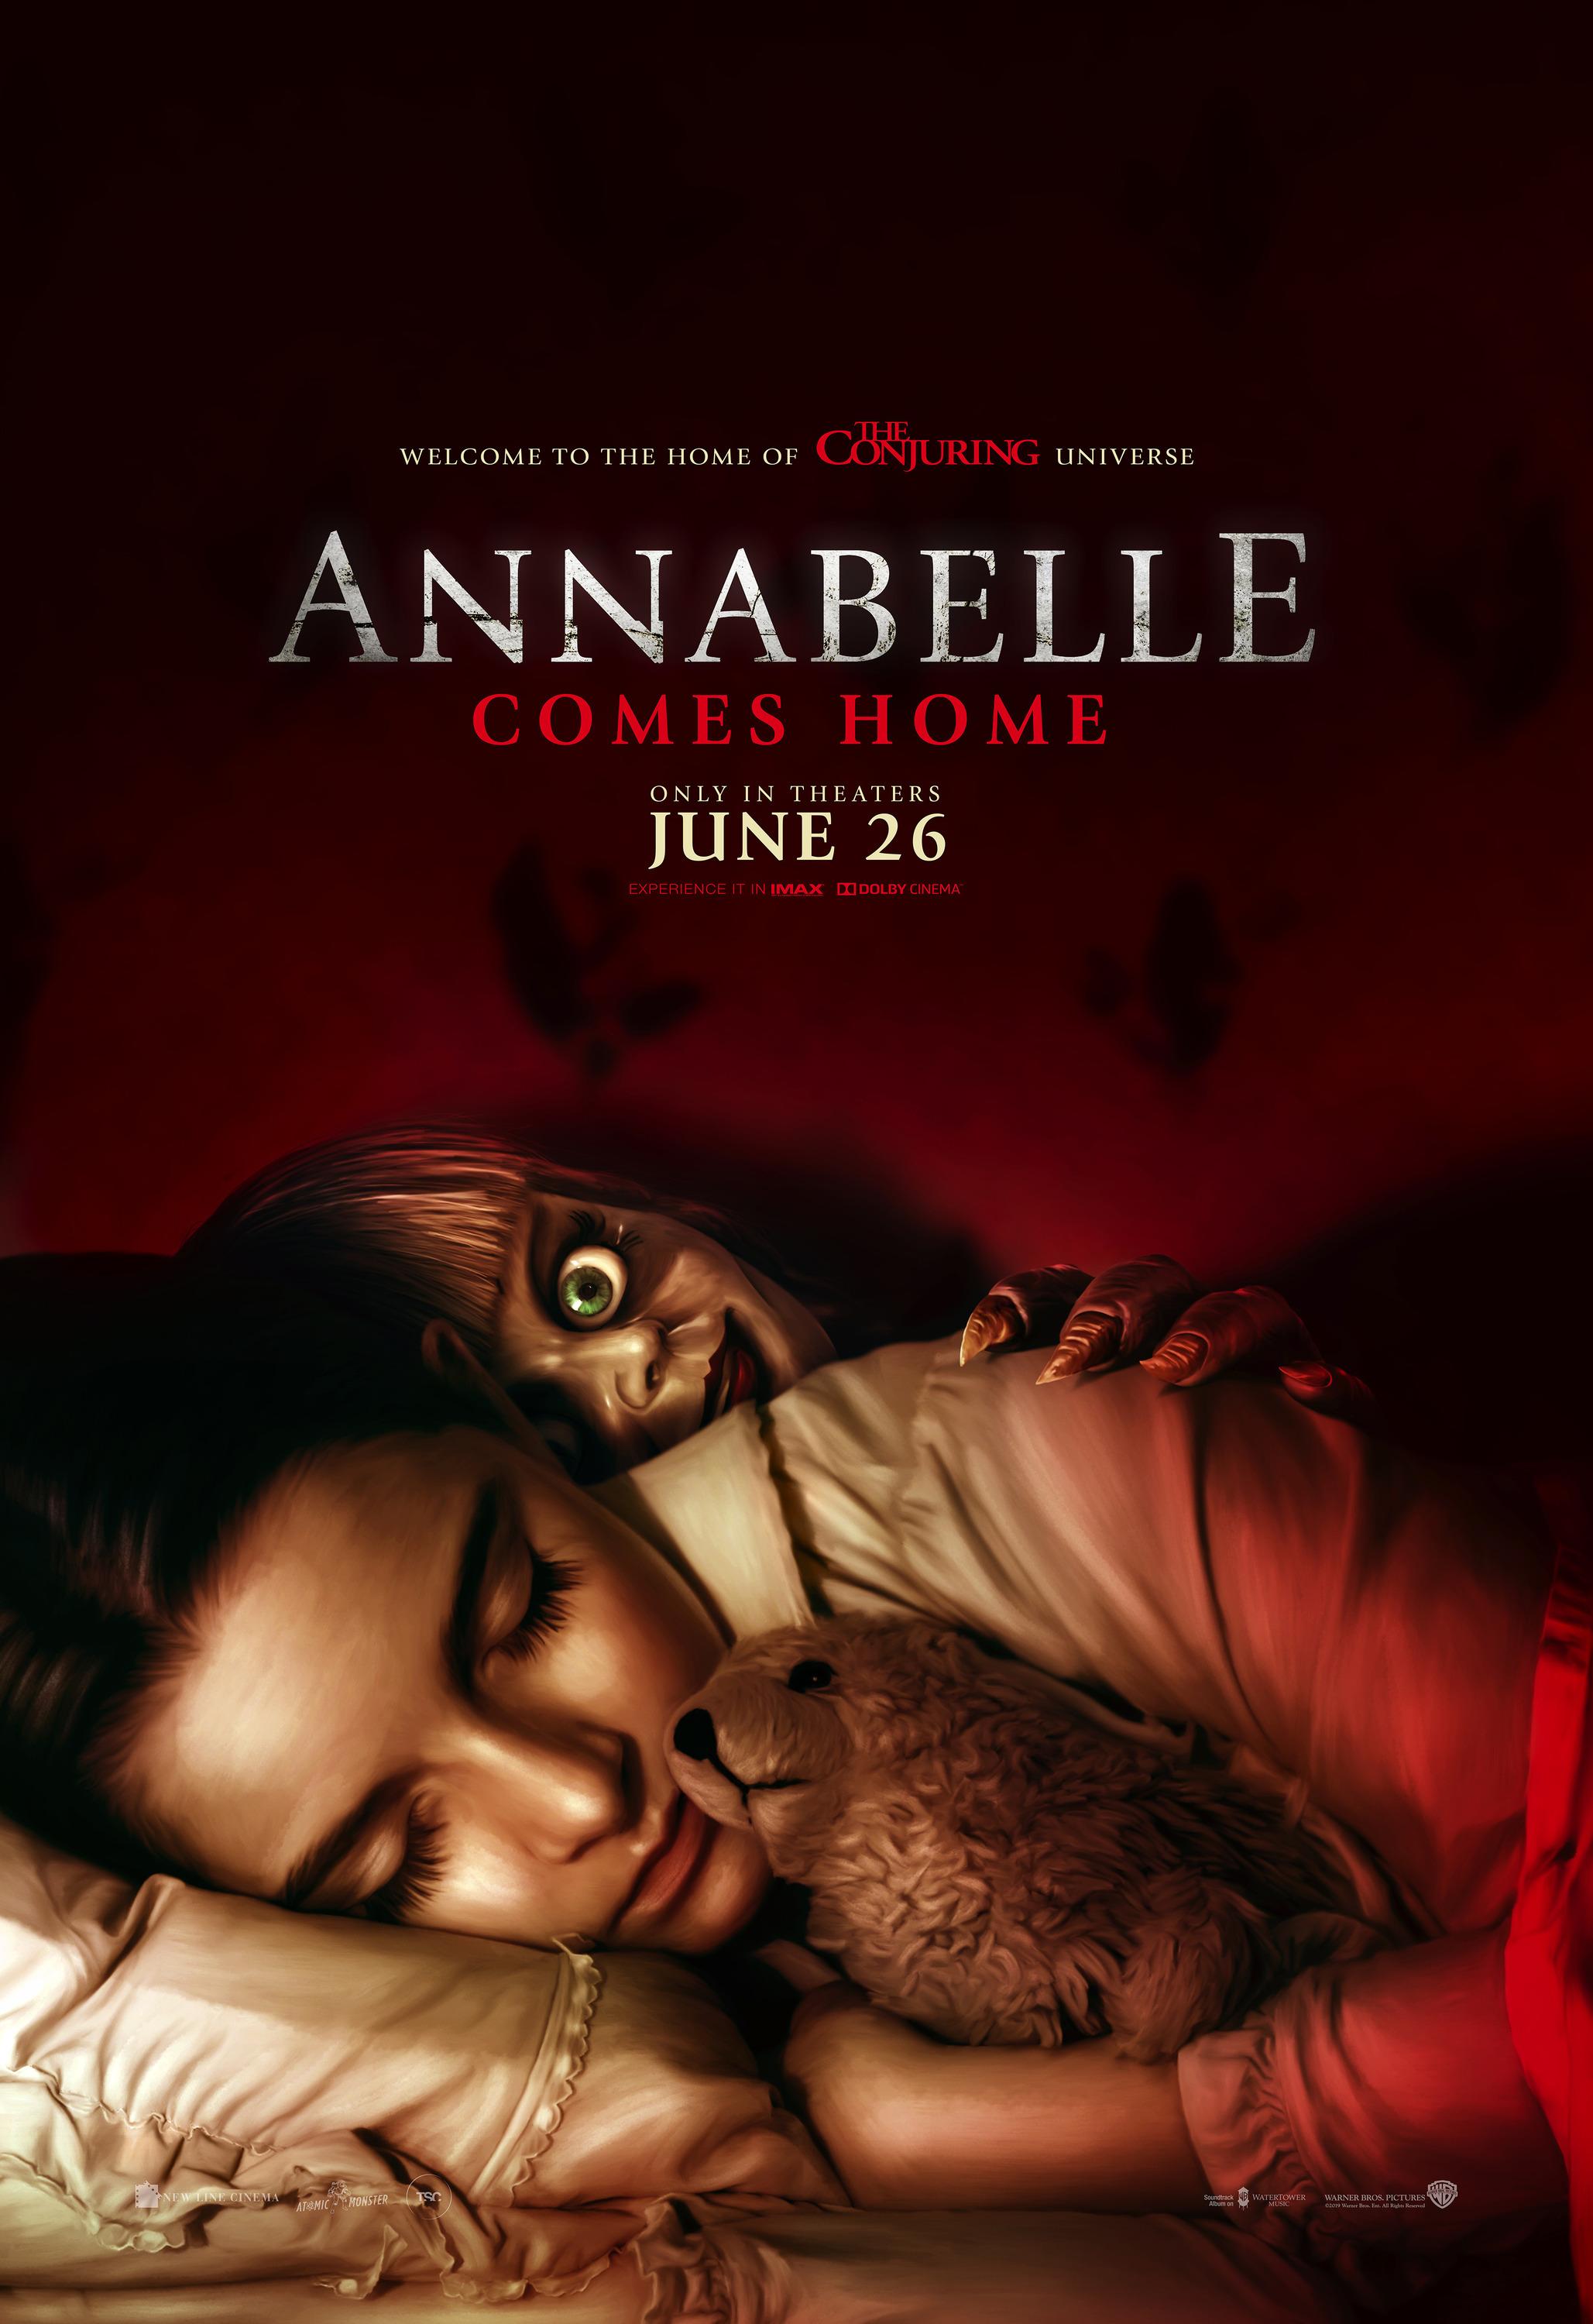 Постер фильма Проклятие Аннабель 3 | Annabelle Comes Home